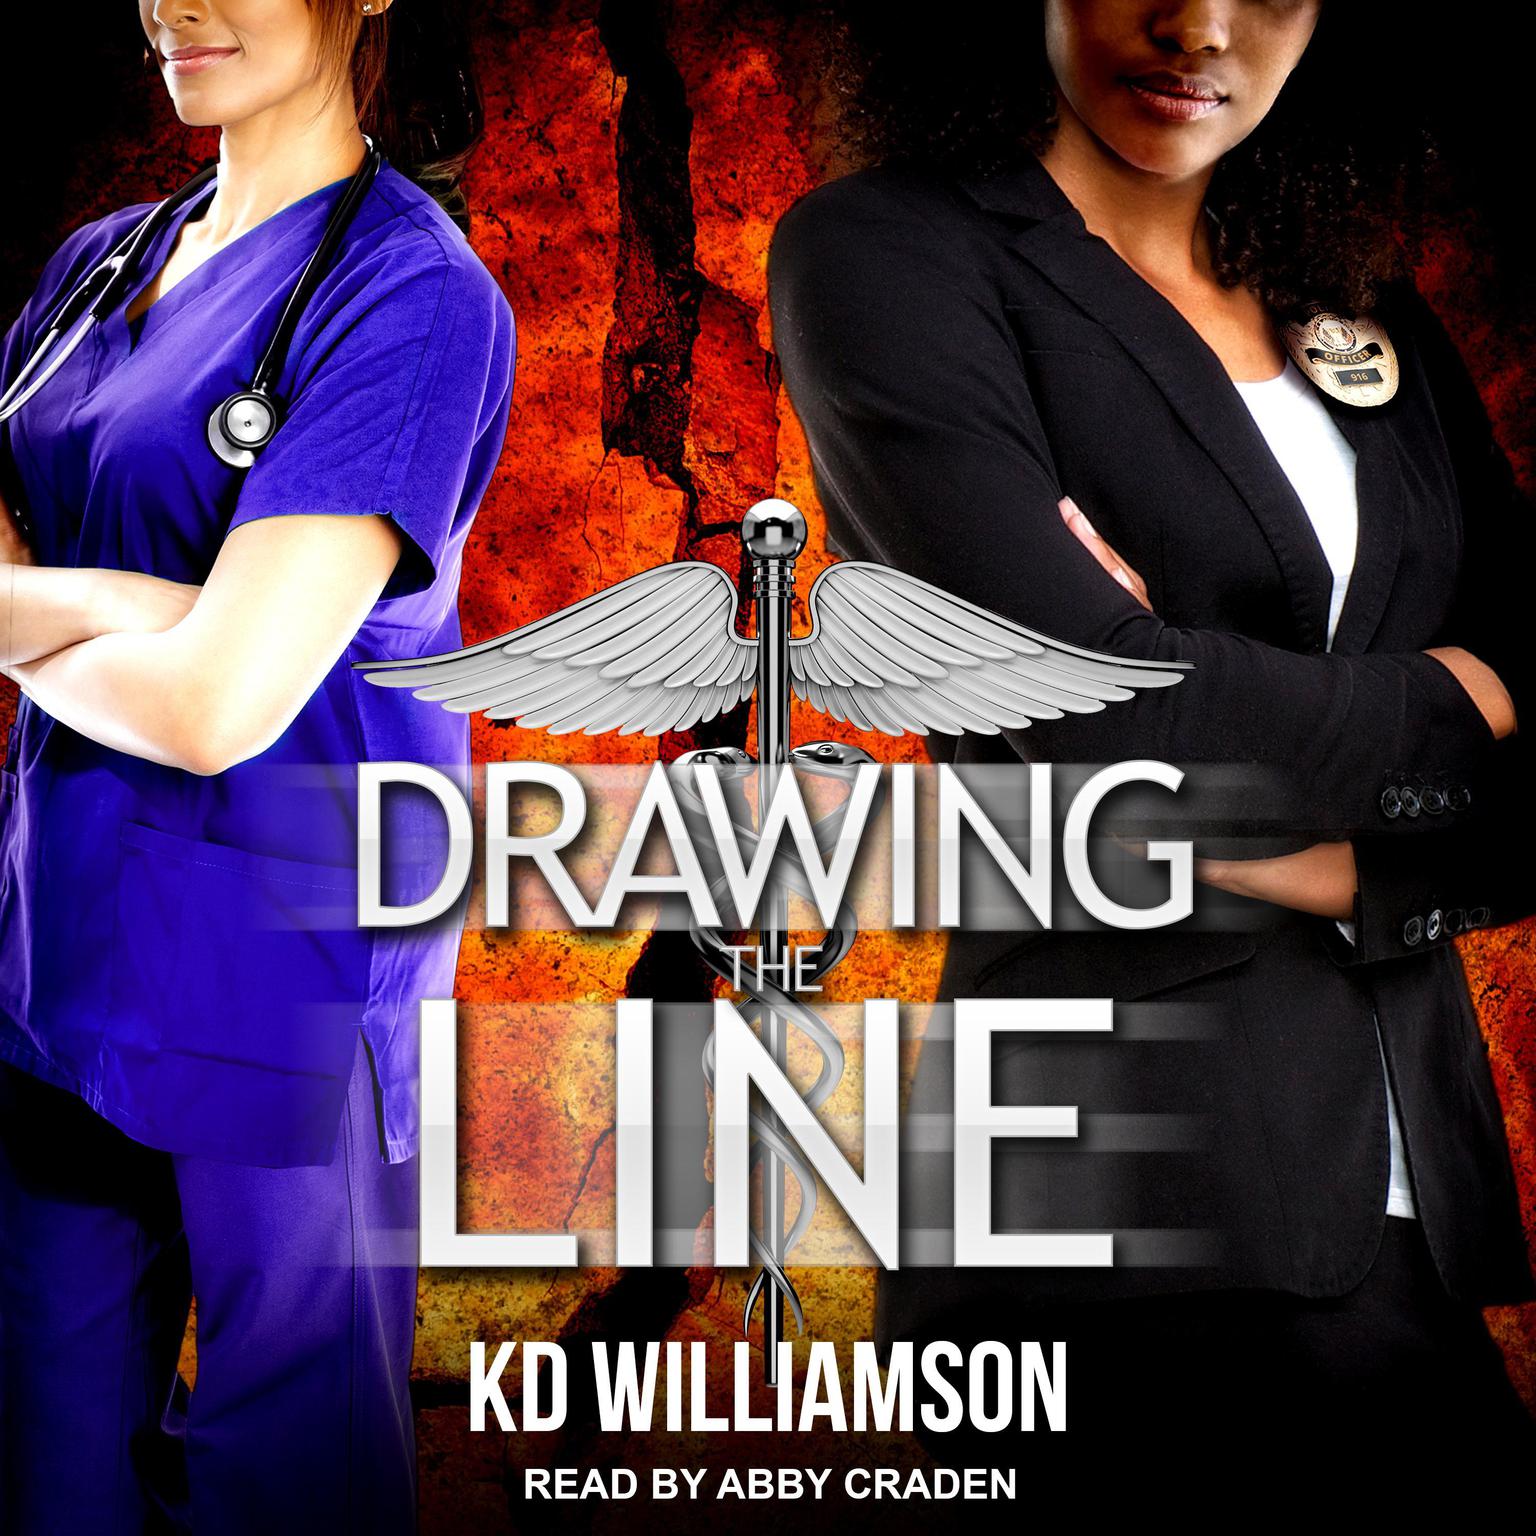 KD Williamson, Abby Craden: Drawing the Line (AudiobookFormat, 2019, Ylva)